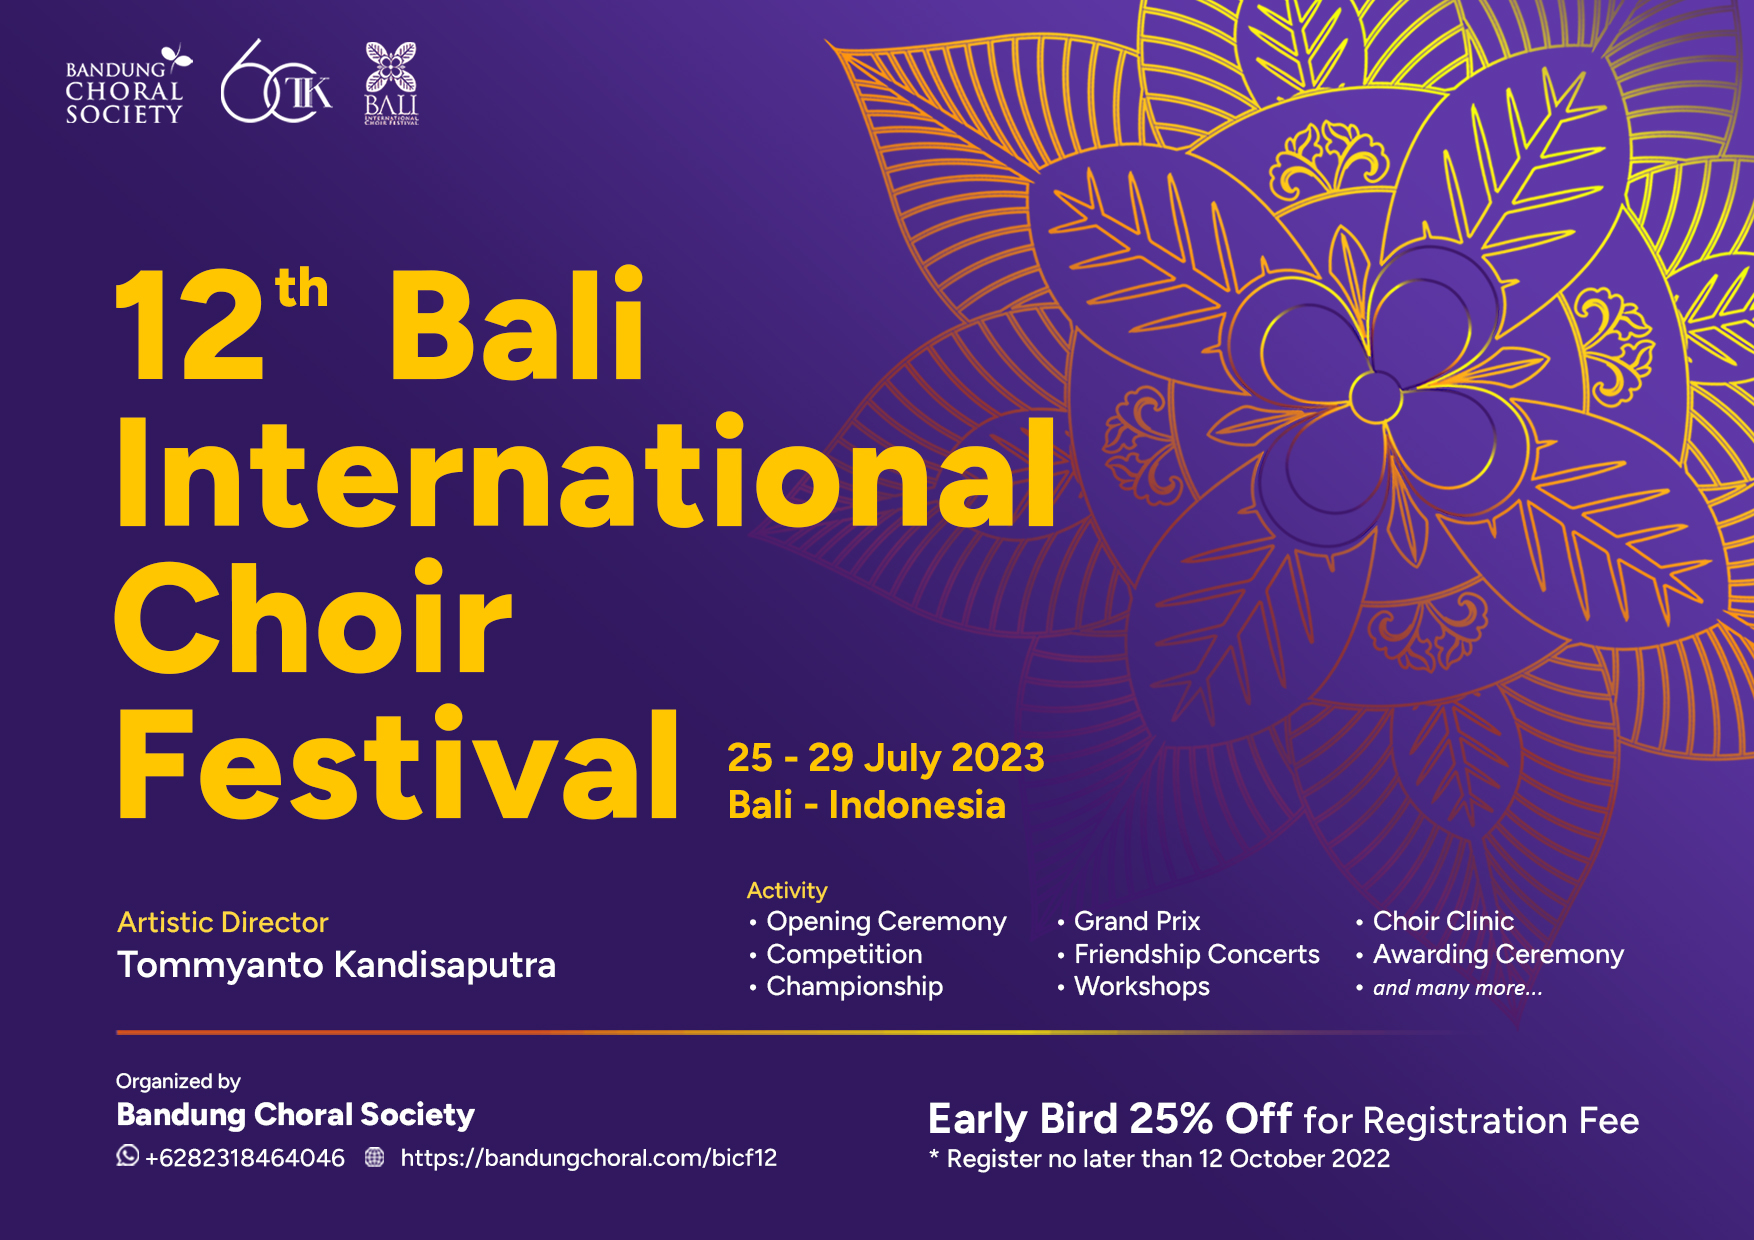 The 12th Bali International Choir Festival 2023